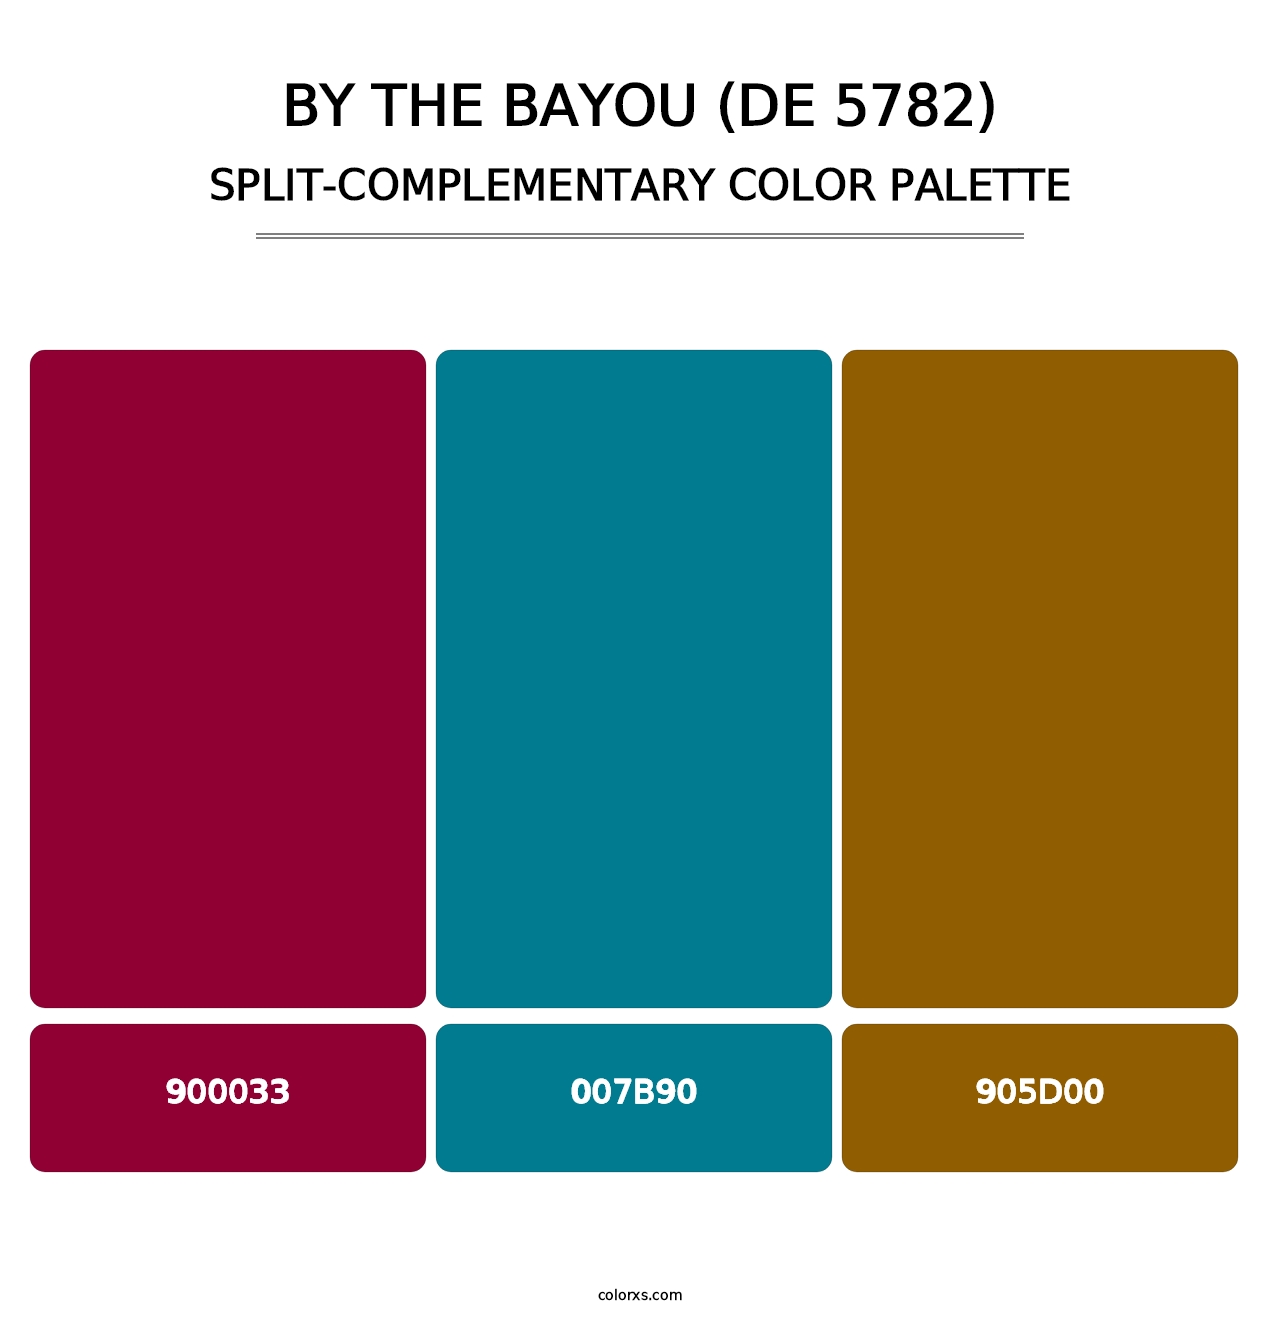 By the Bayou (DE 5782) - Split-Complementary Color Palette